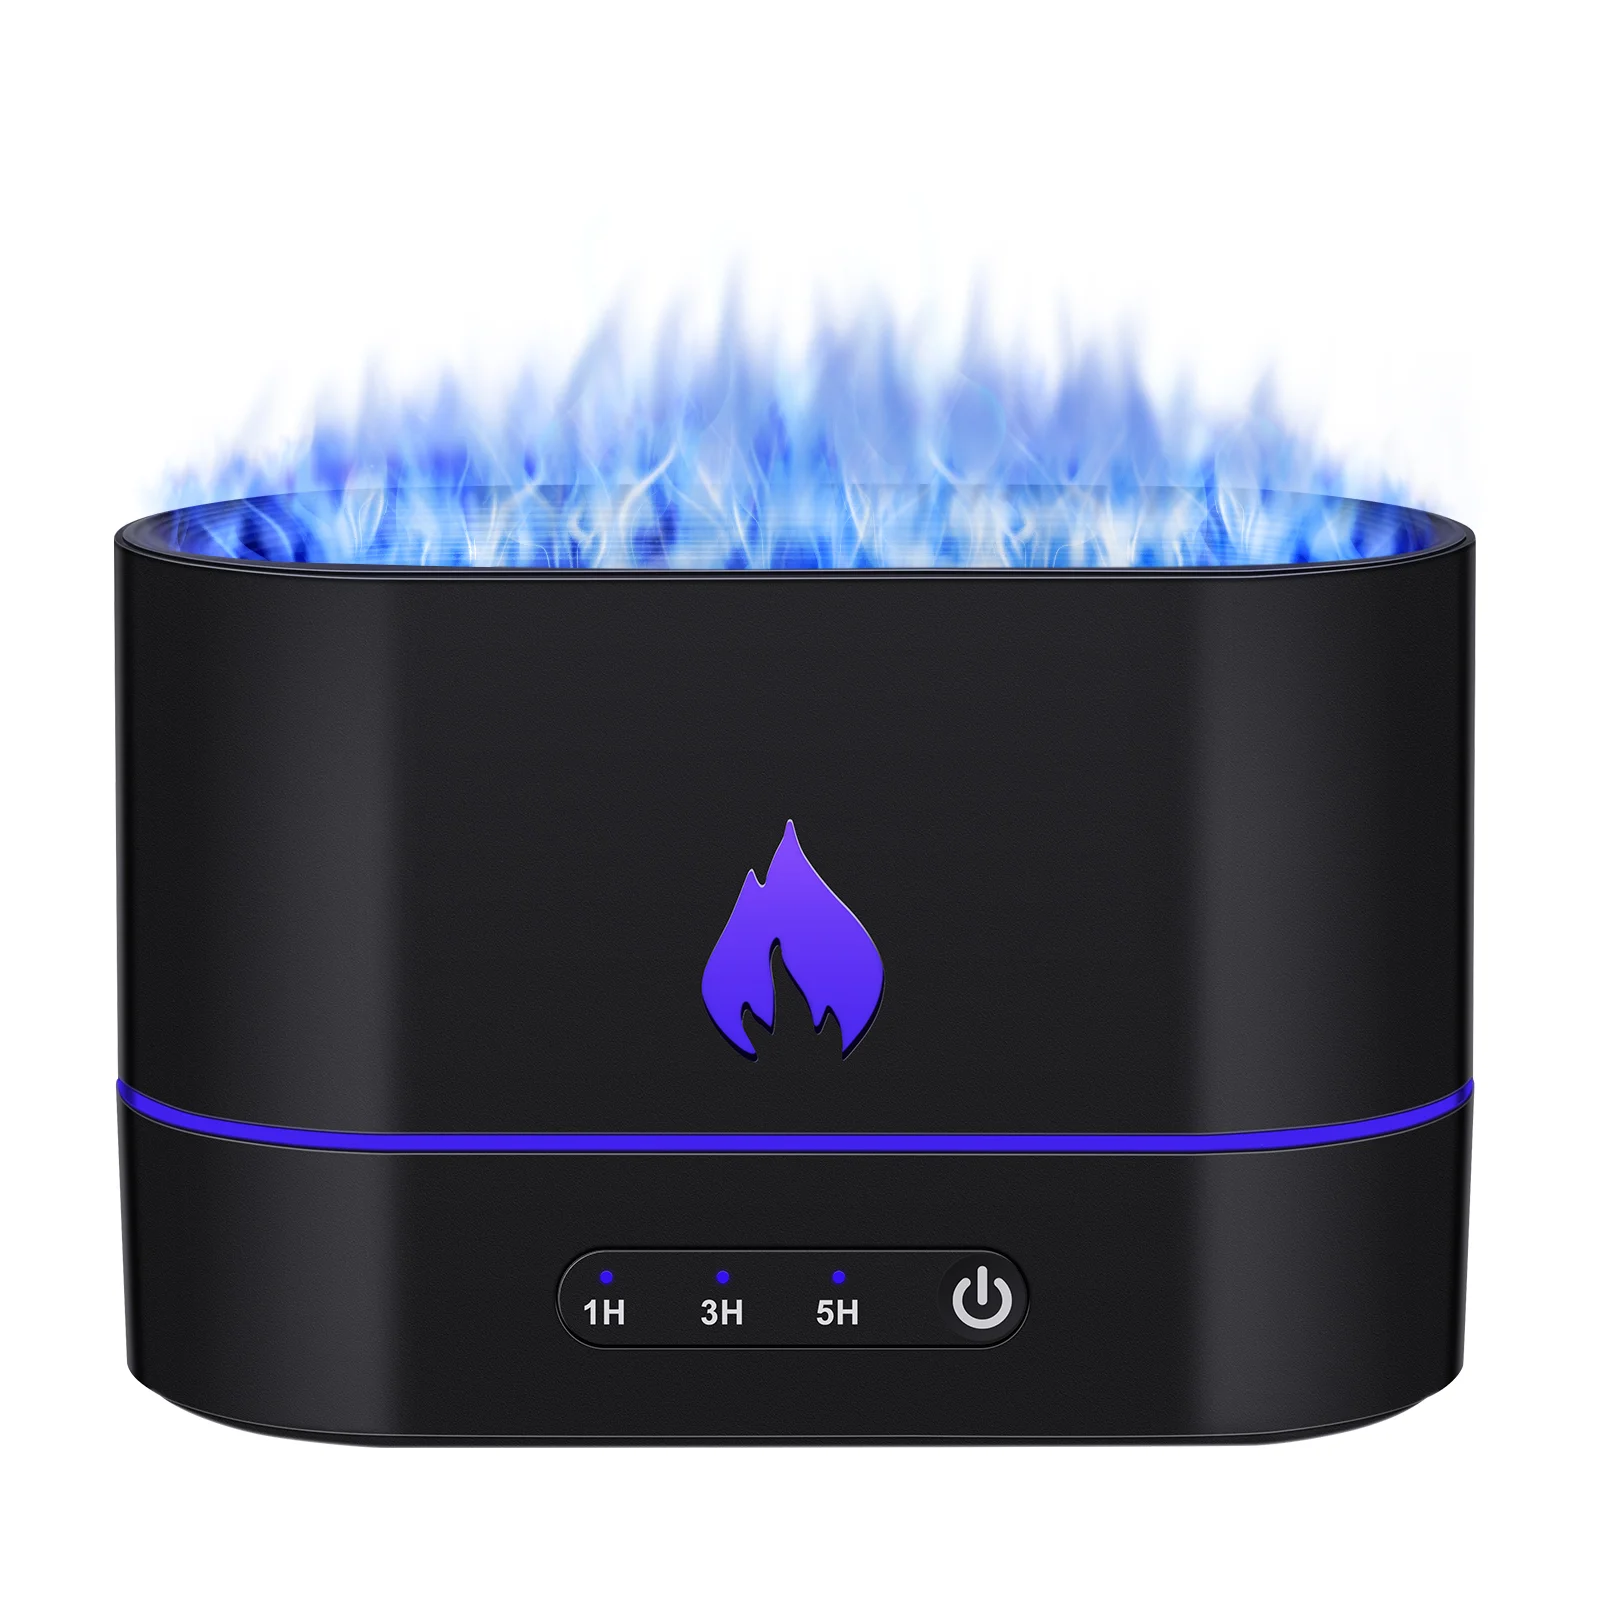 

Diffuser Humidifier Aroma Oil Air Flame Mini Essential Aromatherapy Mist Portable Decorative Led Light Car Desk Quiet Purifier